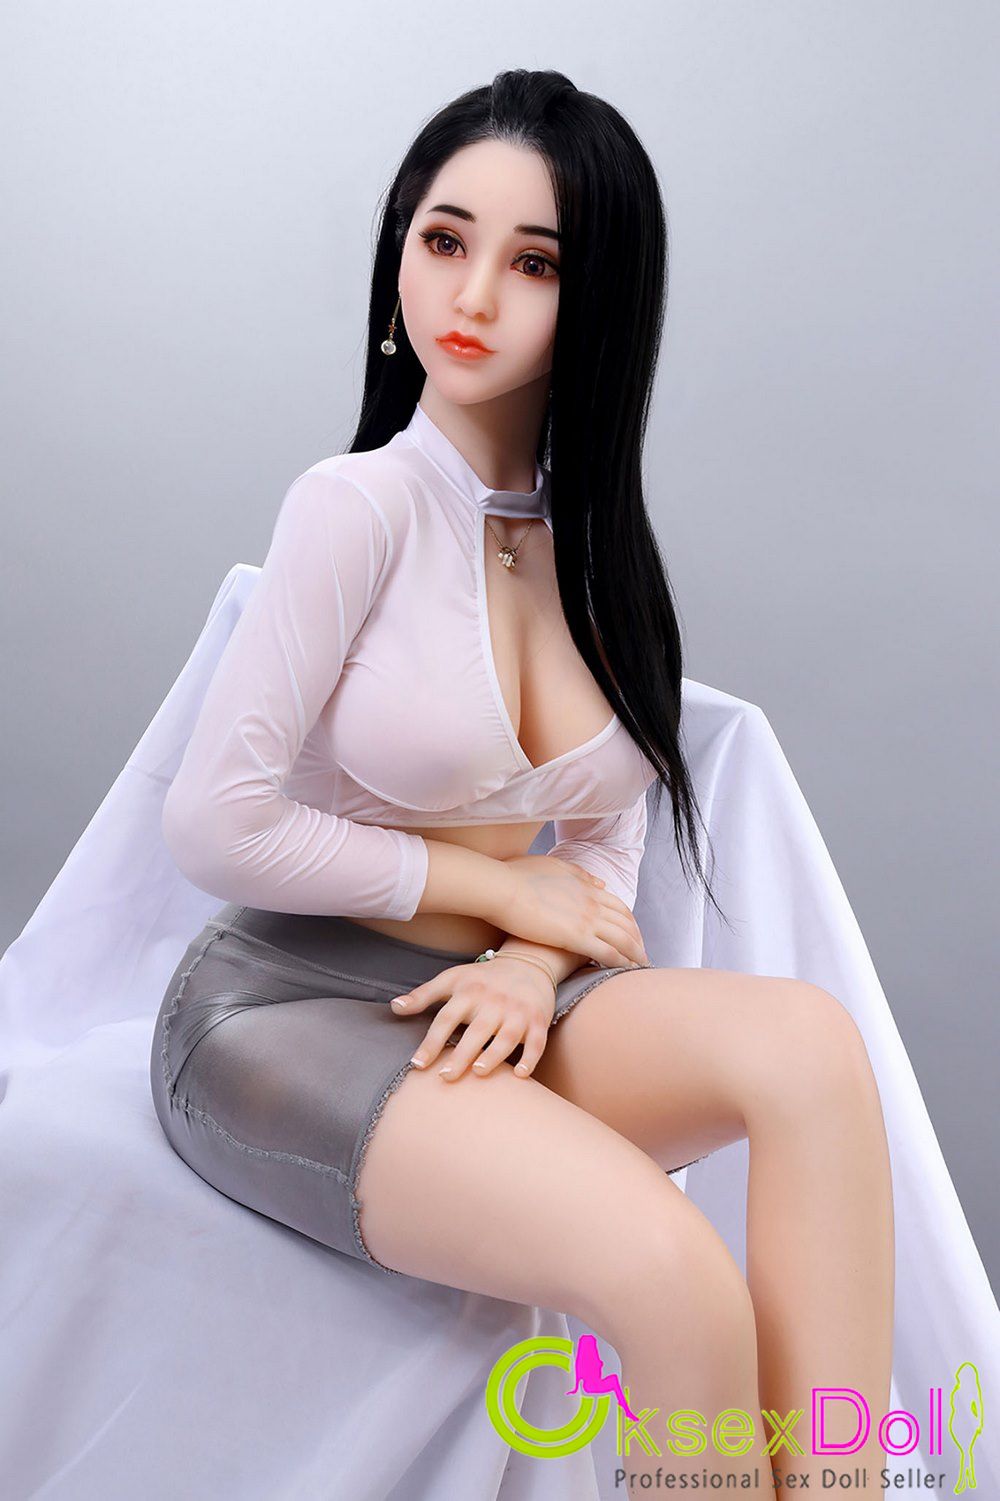 Full Body Sex Doll pic